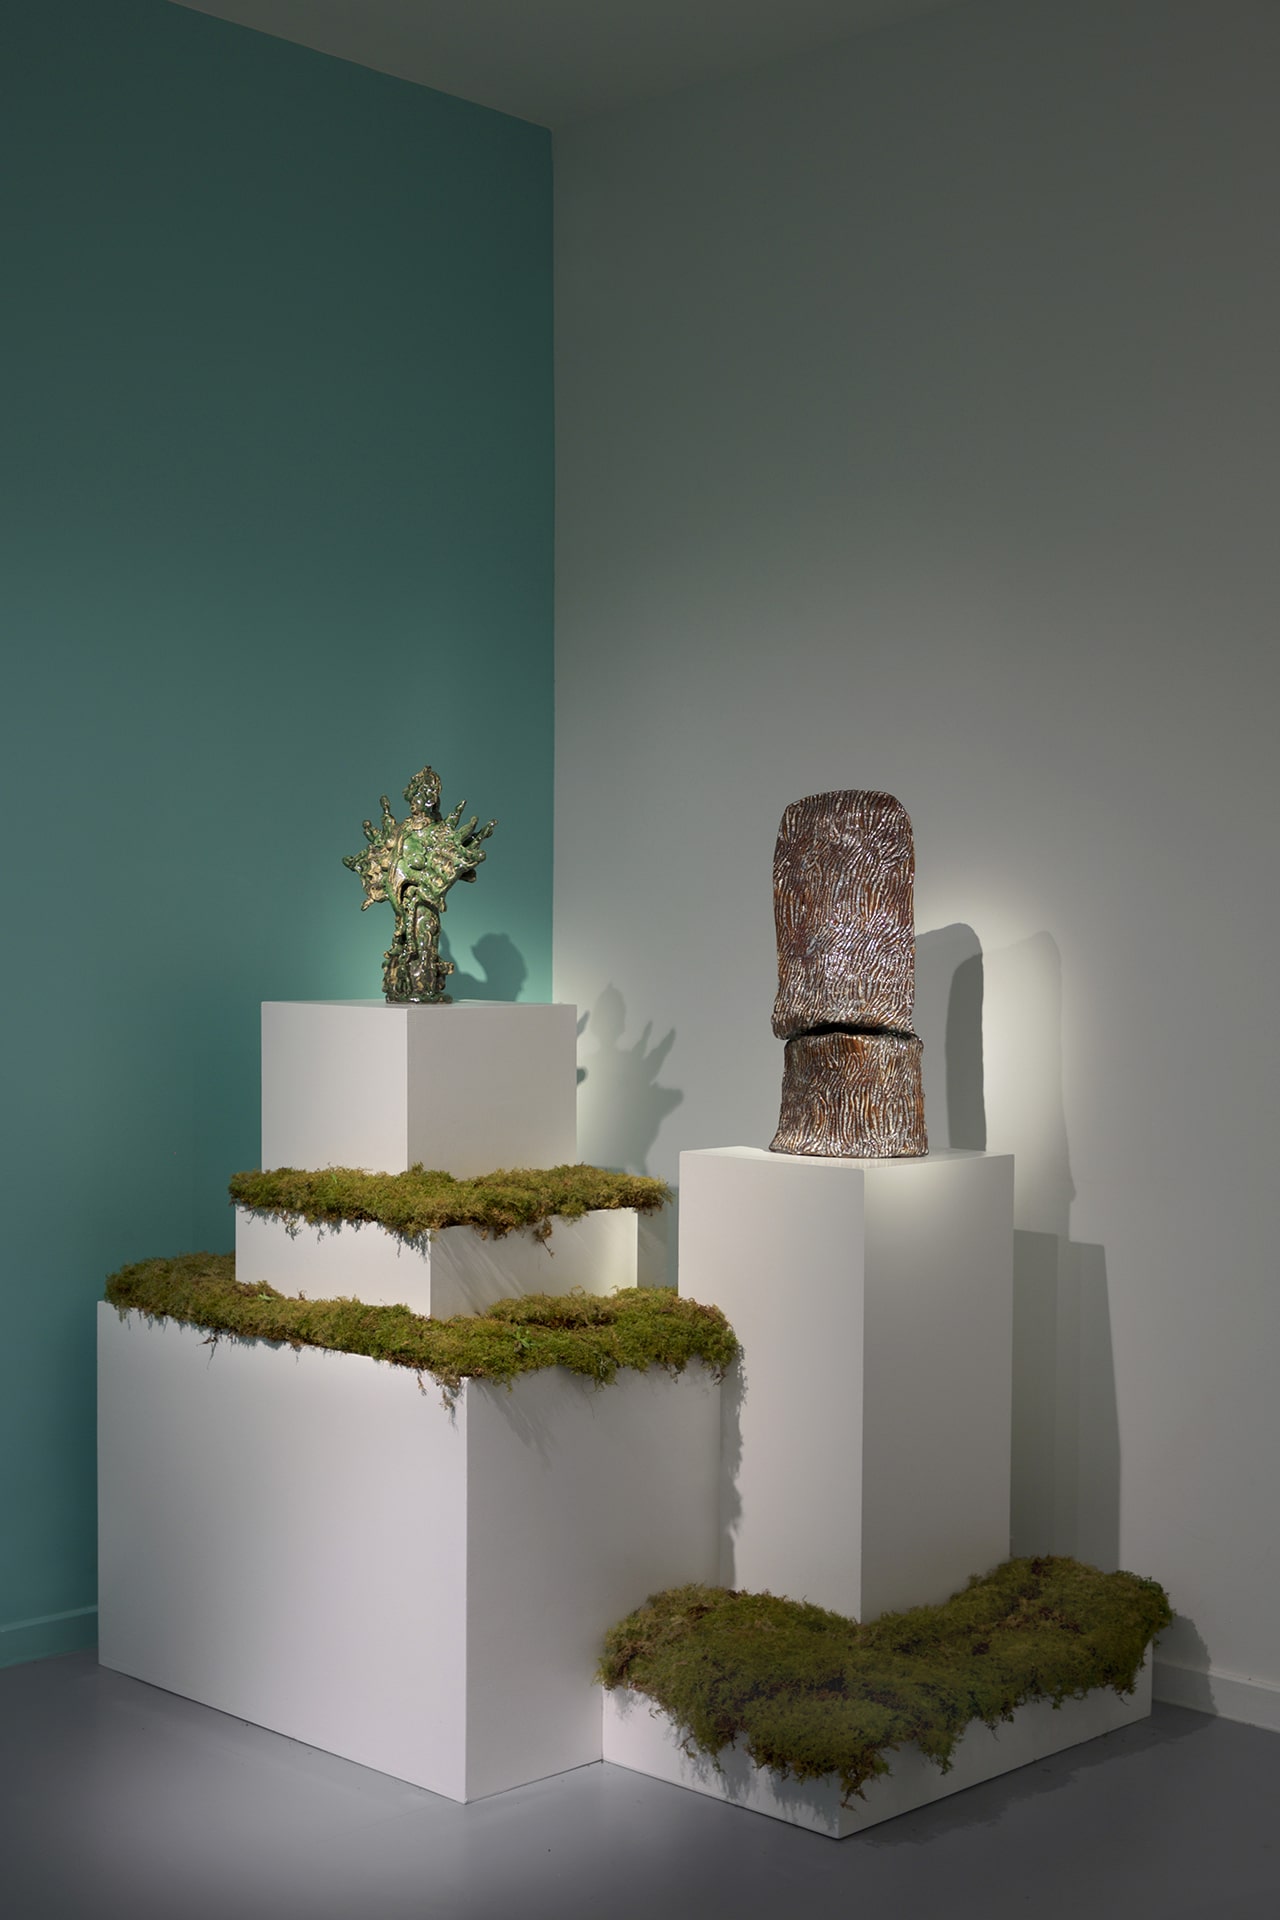 Ann Veronica JANSSENS, Magic Mirror Green, 2014, Collection privée, ADAGP Paris 2022, Photo Tim Perceval